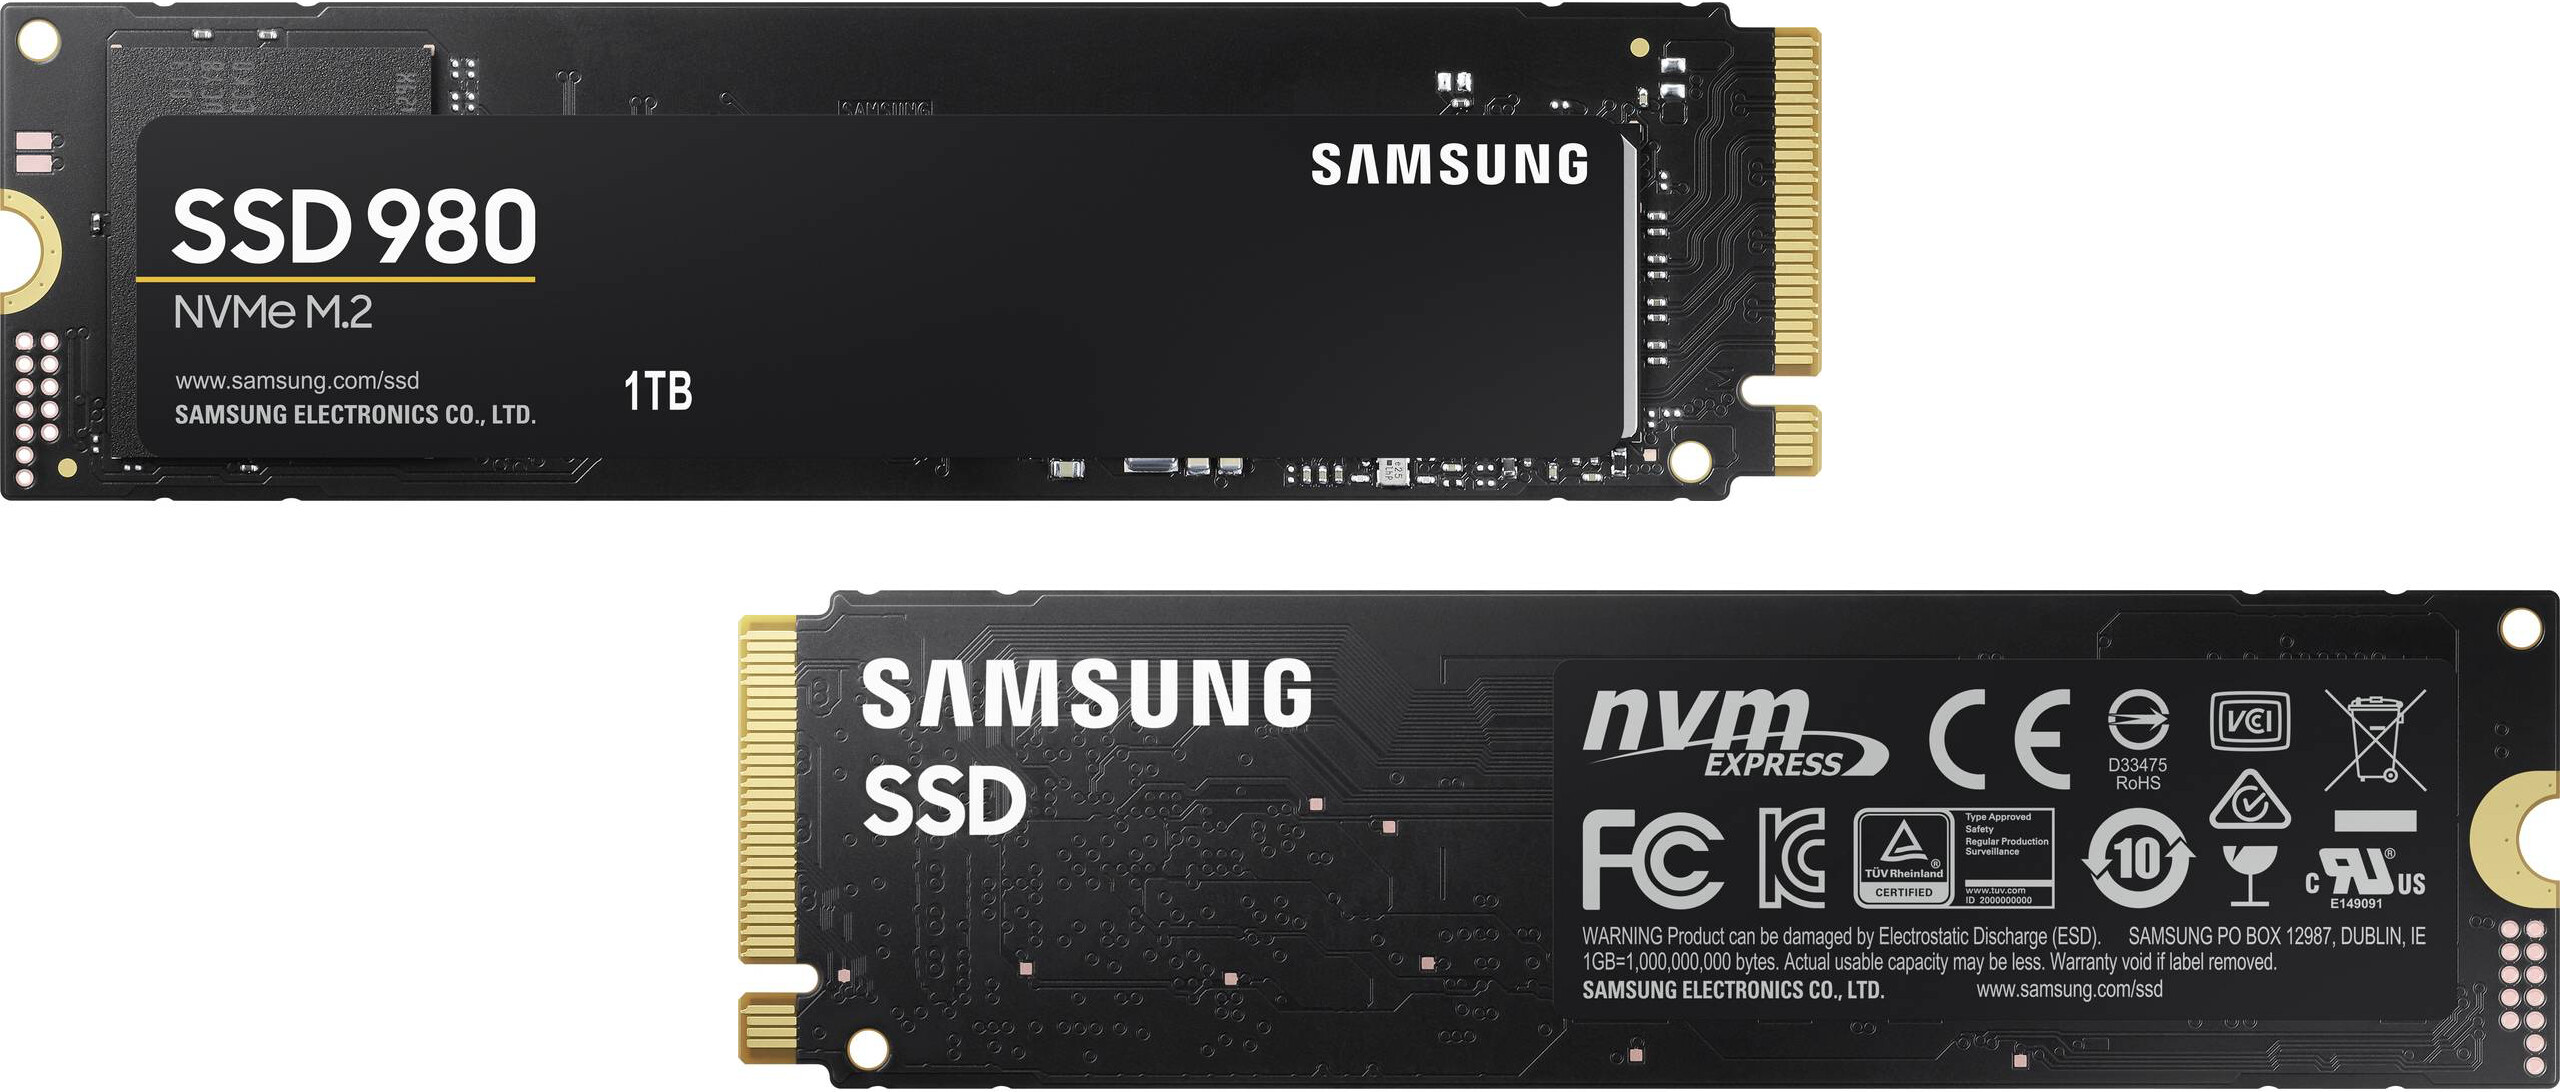 Samsung 980 is a Cost-Effective, DRAM-less PCIe Gen 3.0 M.2 | TechPowerUp